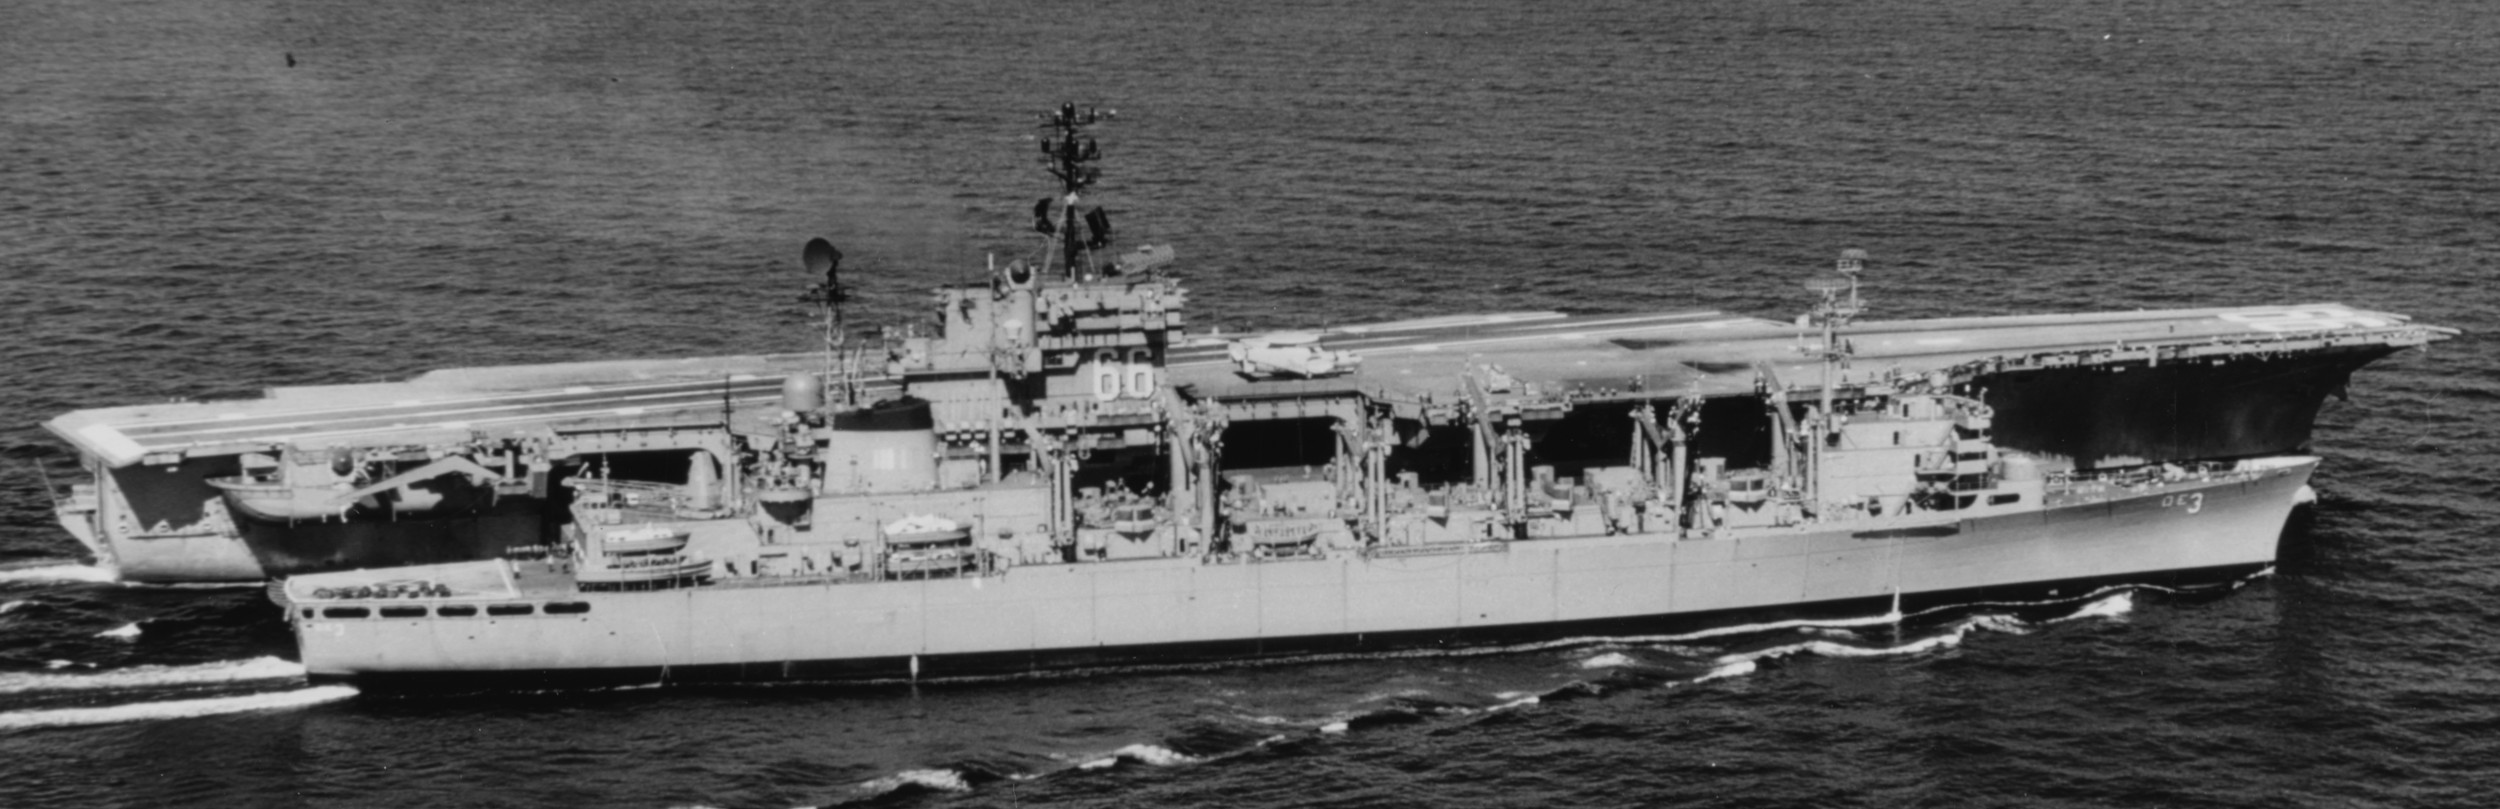 cv-66 uss america kitty hawk class aircraft carrier caribbean sea 1970 18